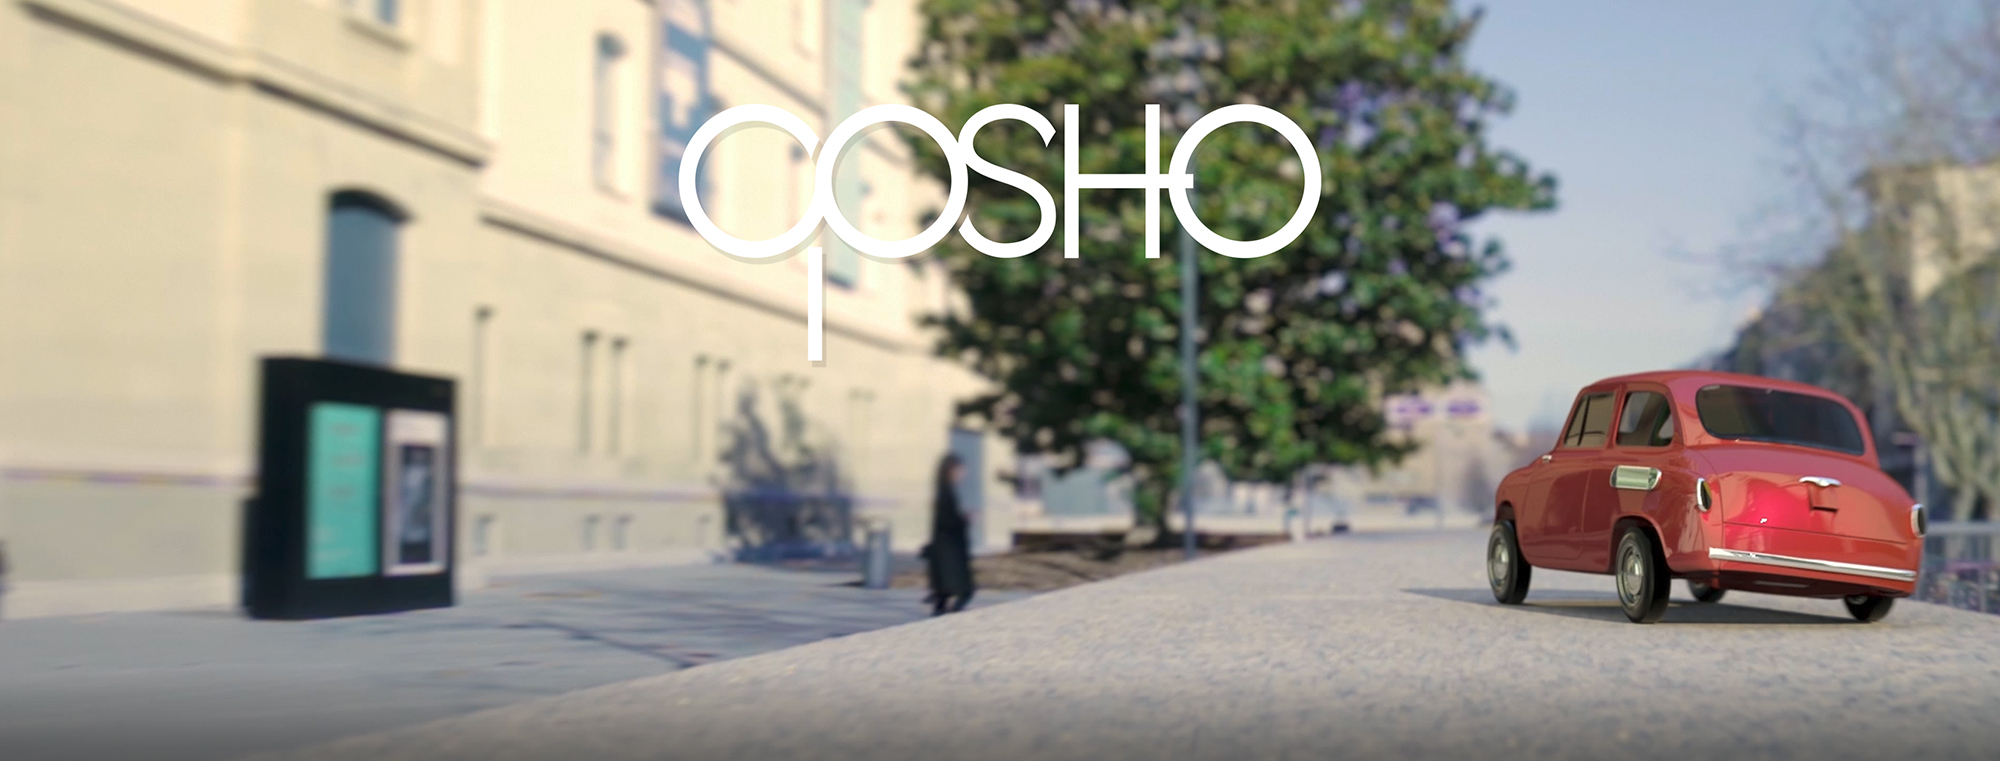 GOSHO - nos mudamos! by Gosho - Creative Work